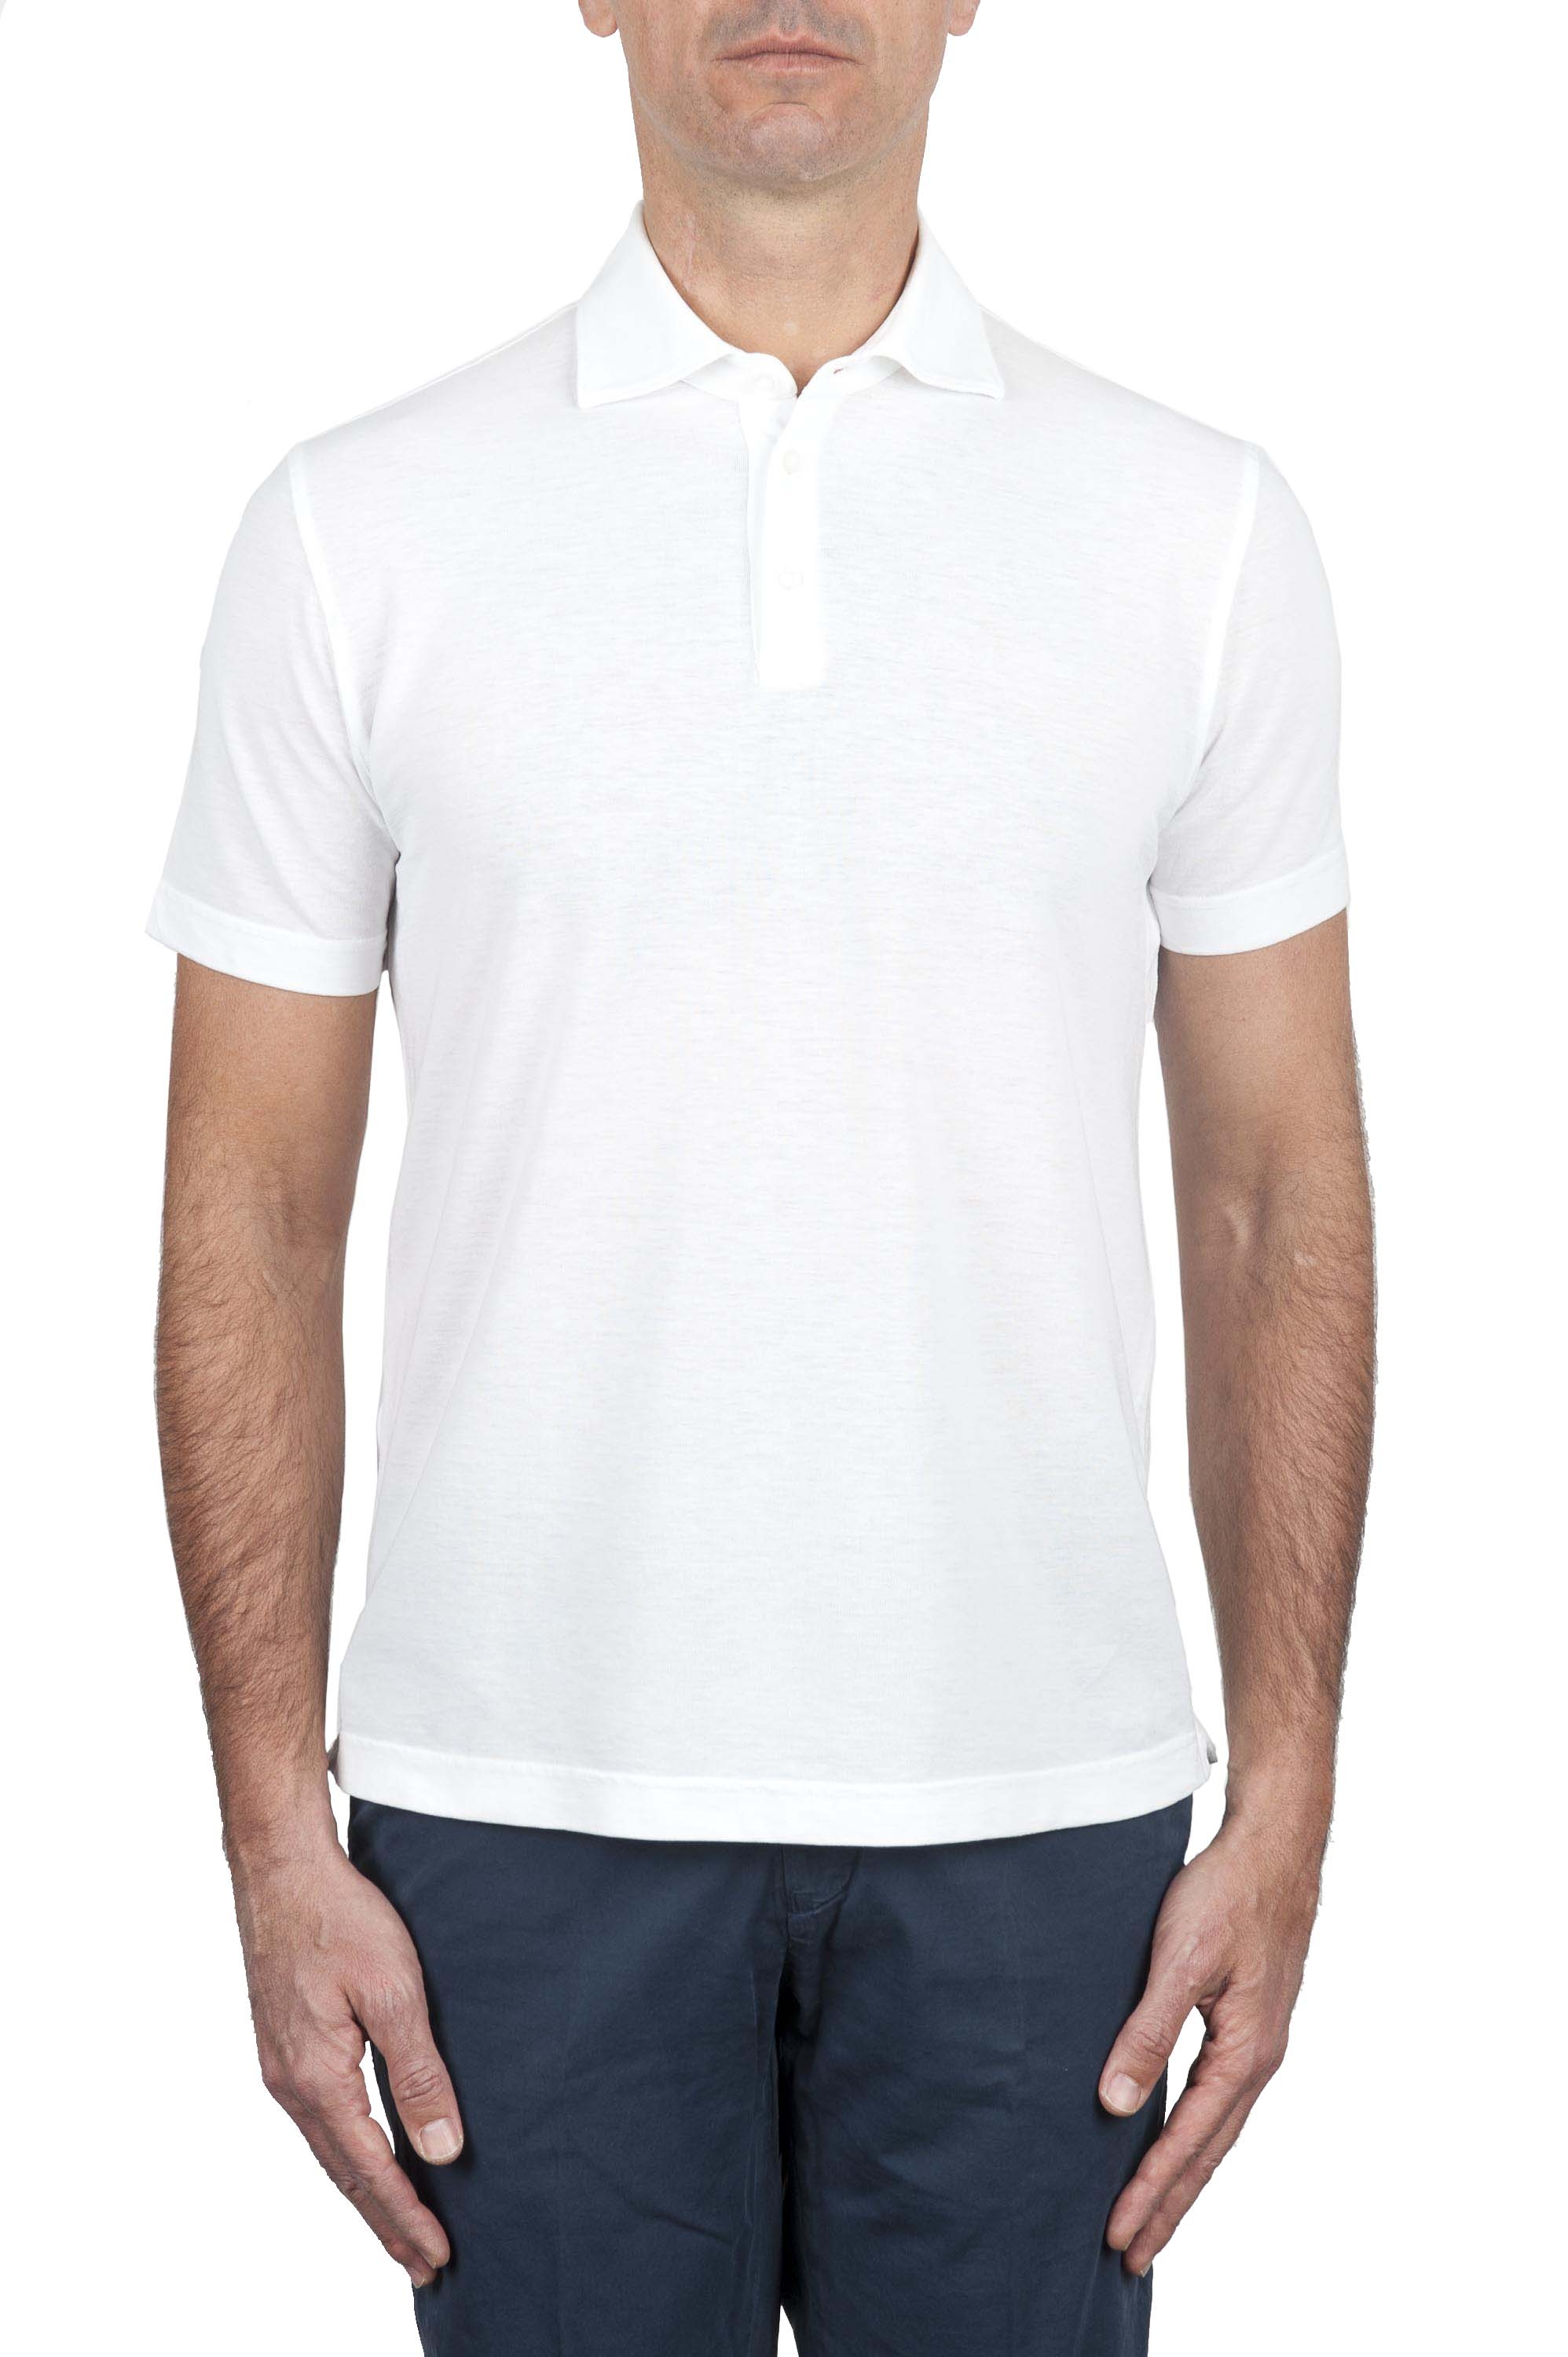 SBU 01689 Classic short sleeve white cotton crepe polo shirt 01